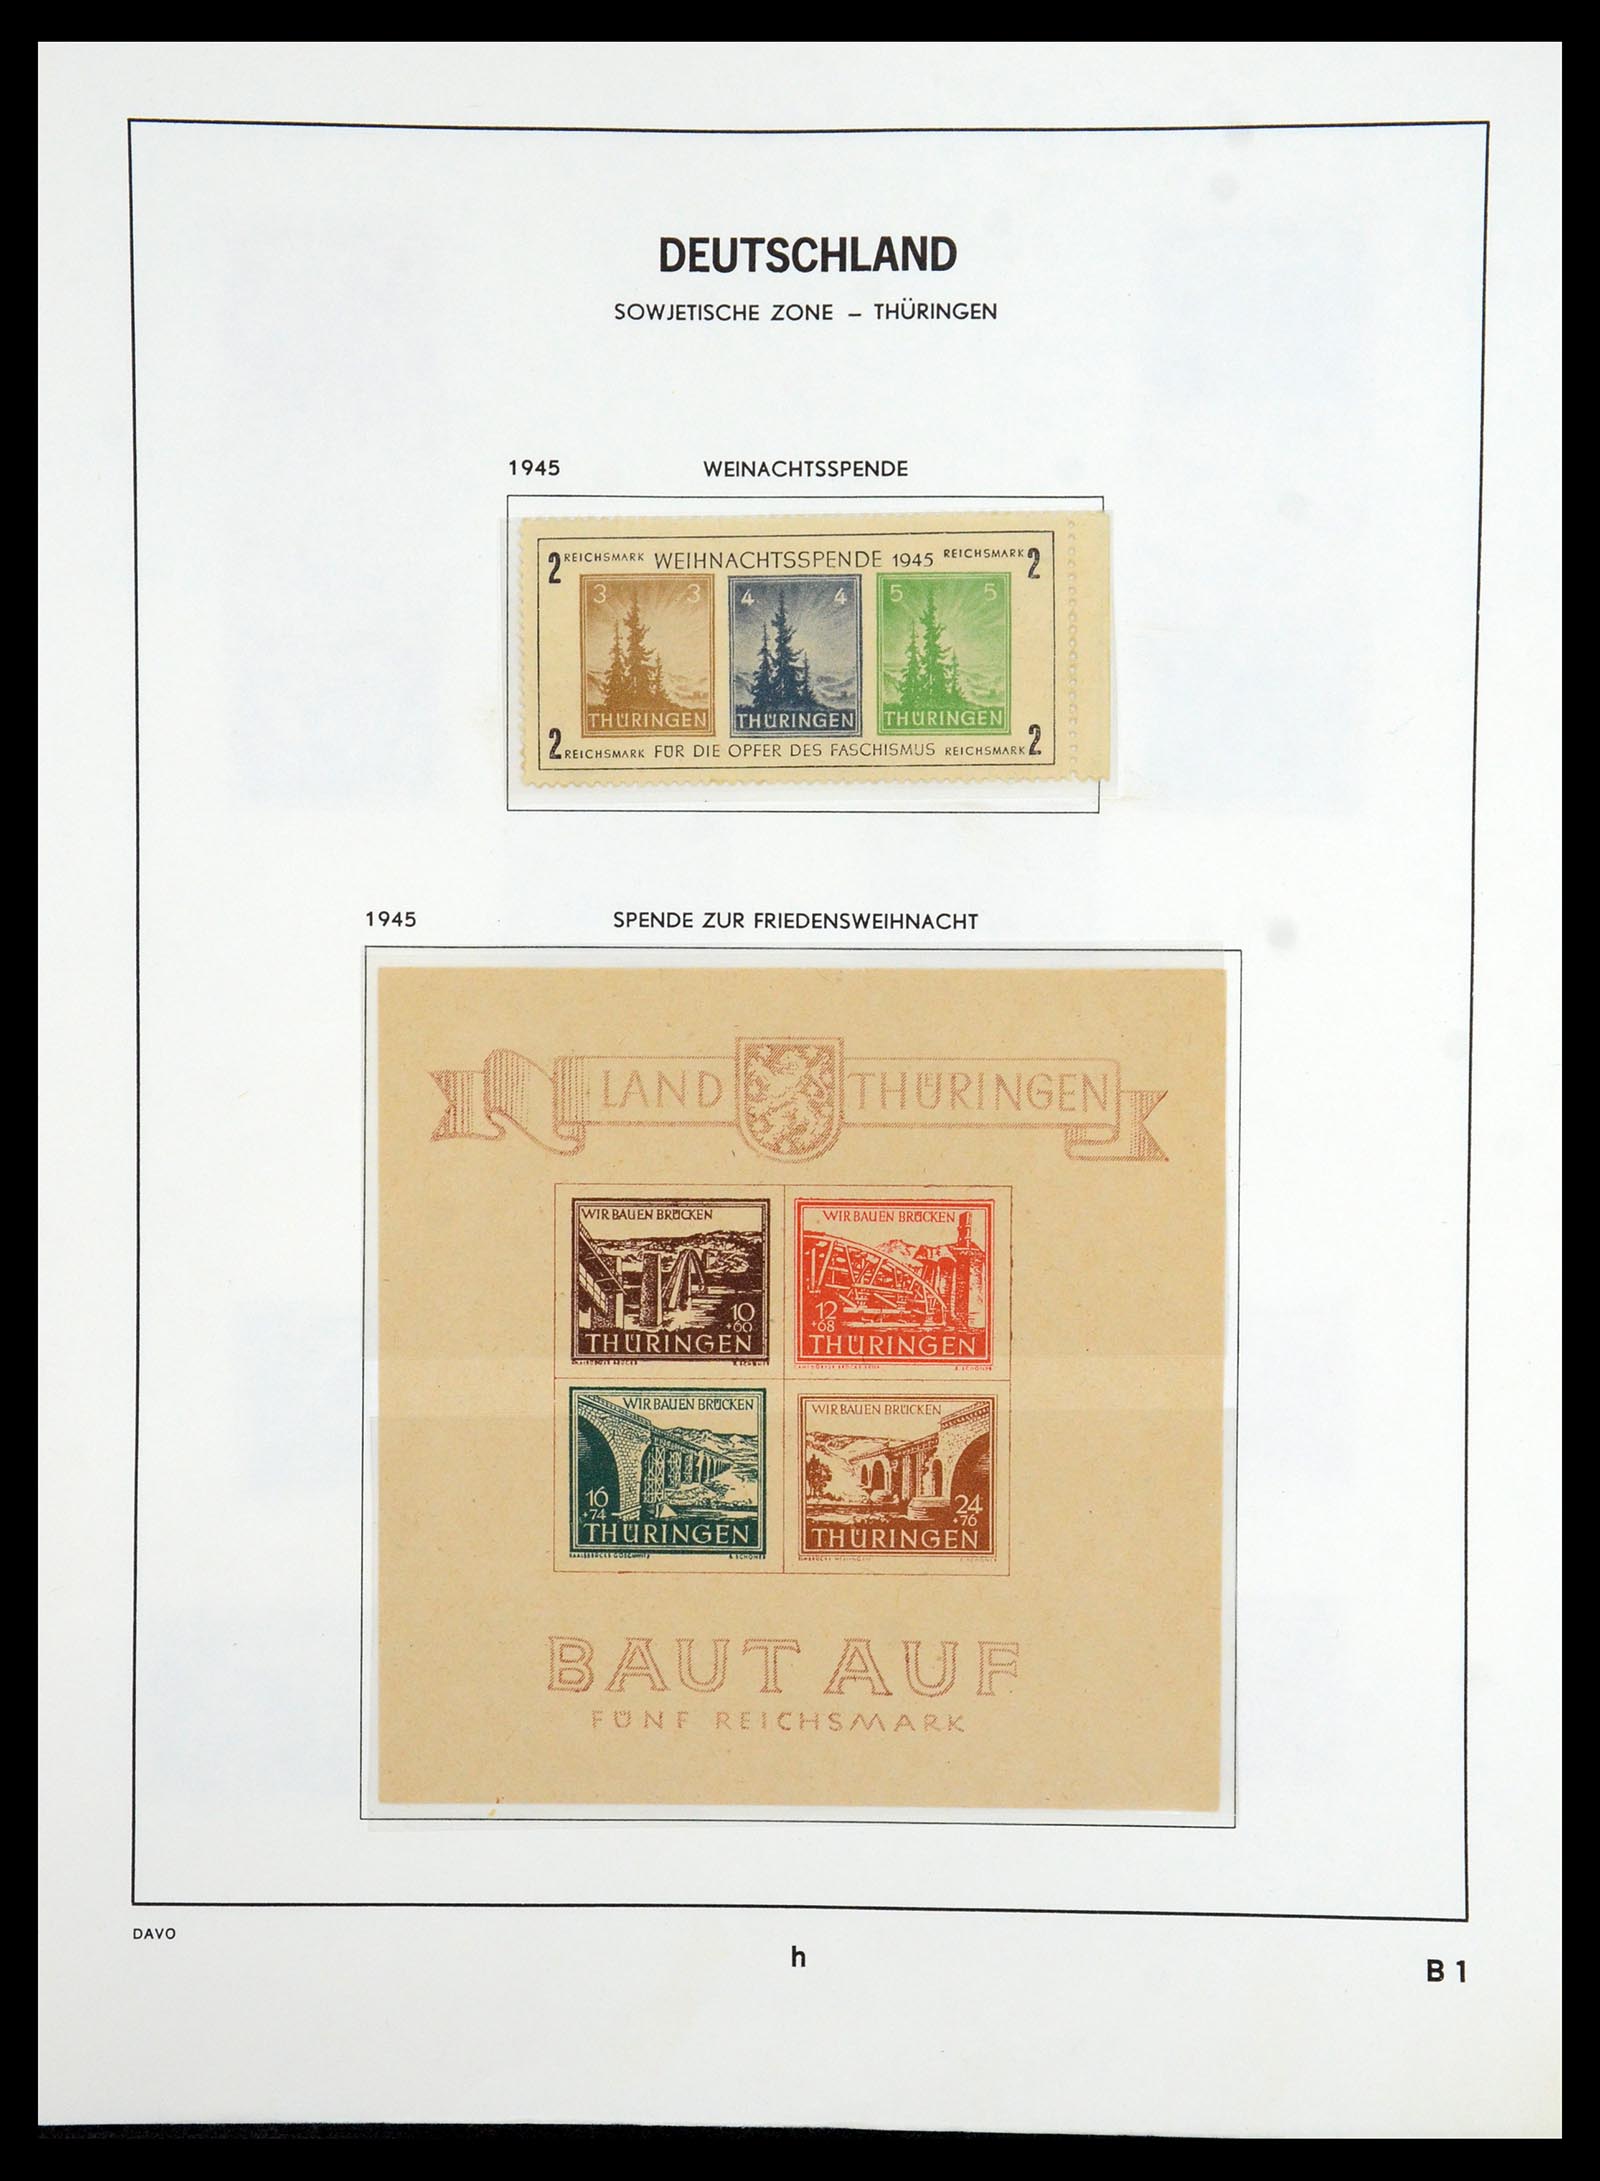 36421 023 - Stamp collection 36421 Soviet Zone 1945-1949.